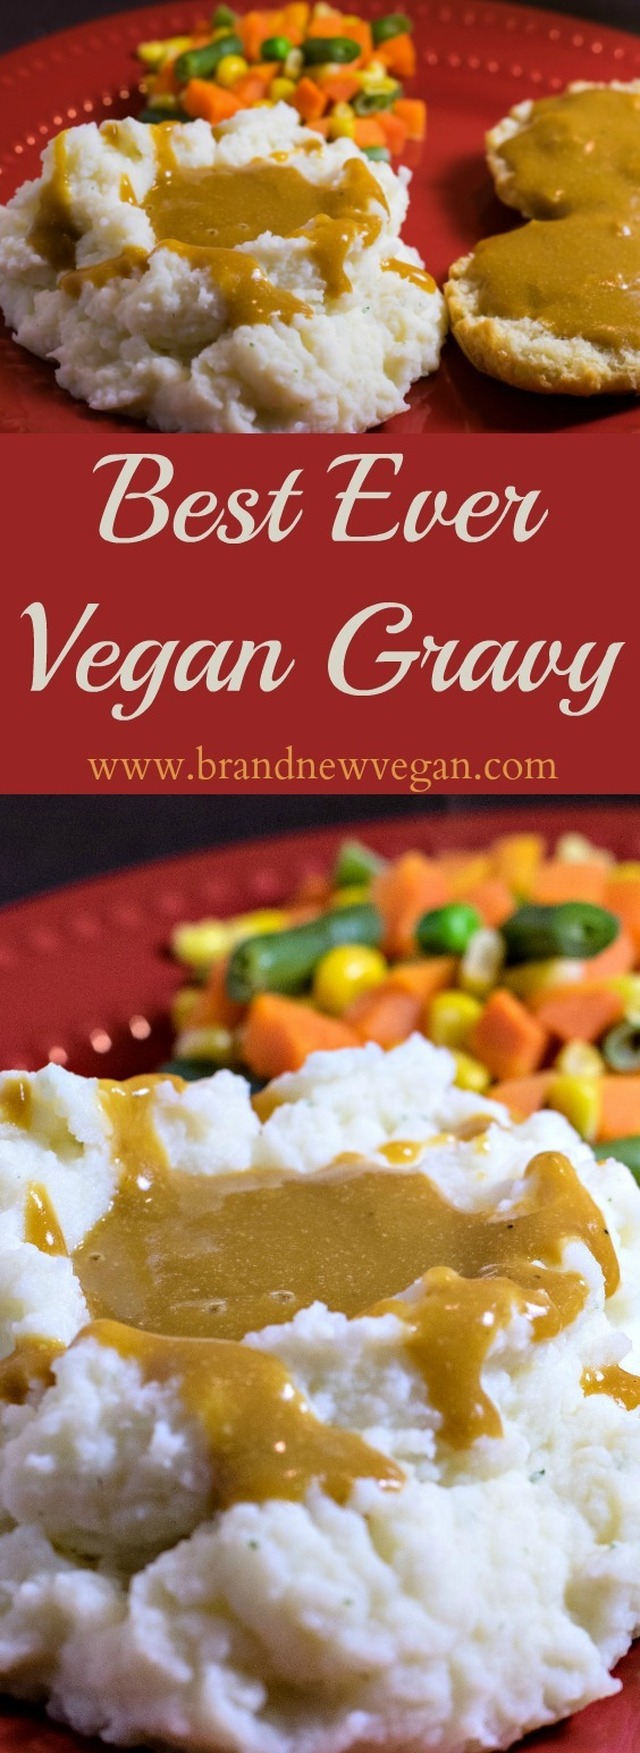 Best Vegan Gravy